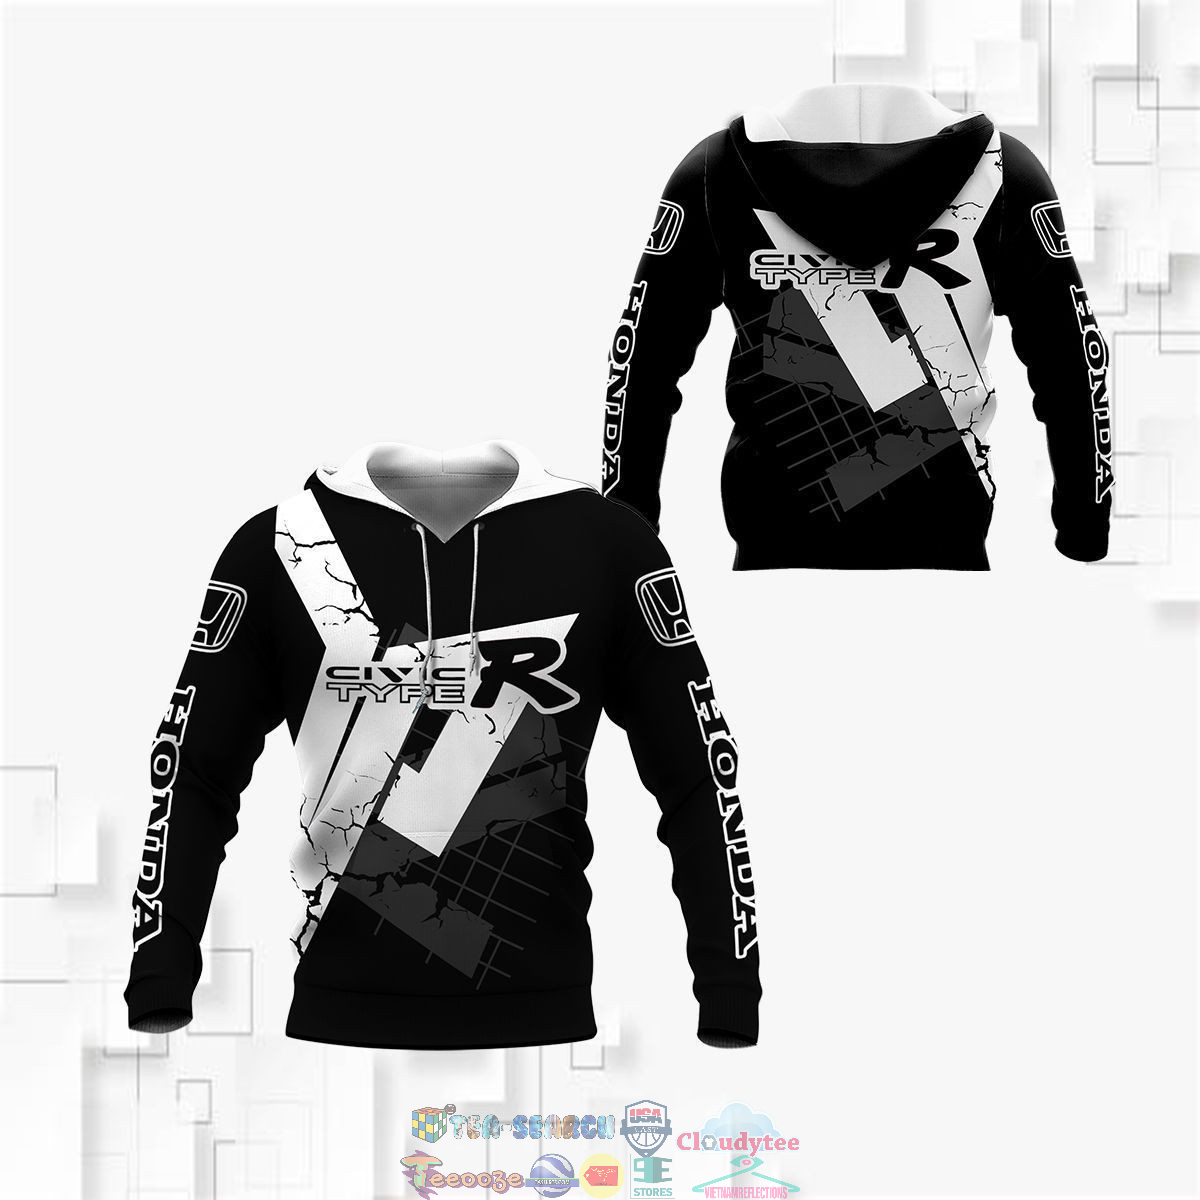 ePkhZsrN-TH130822-23xxxHonda-Civic-Type-R-ver-1-3D-hoodie-and-t-shirt3.jpg